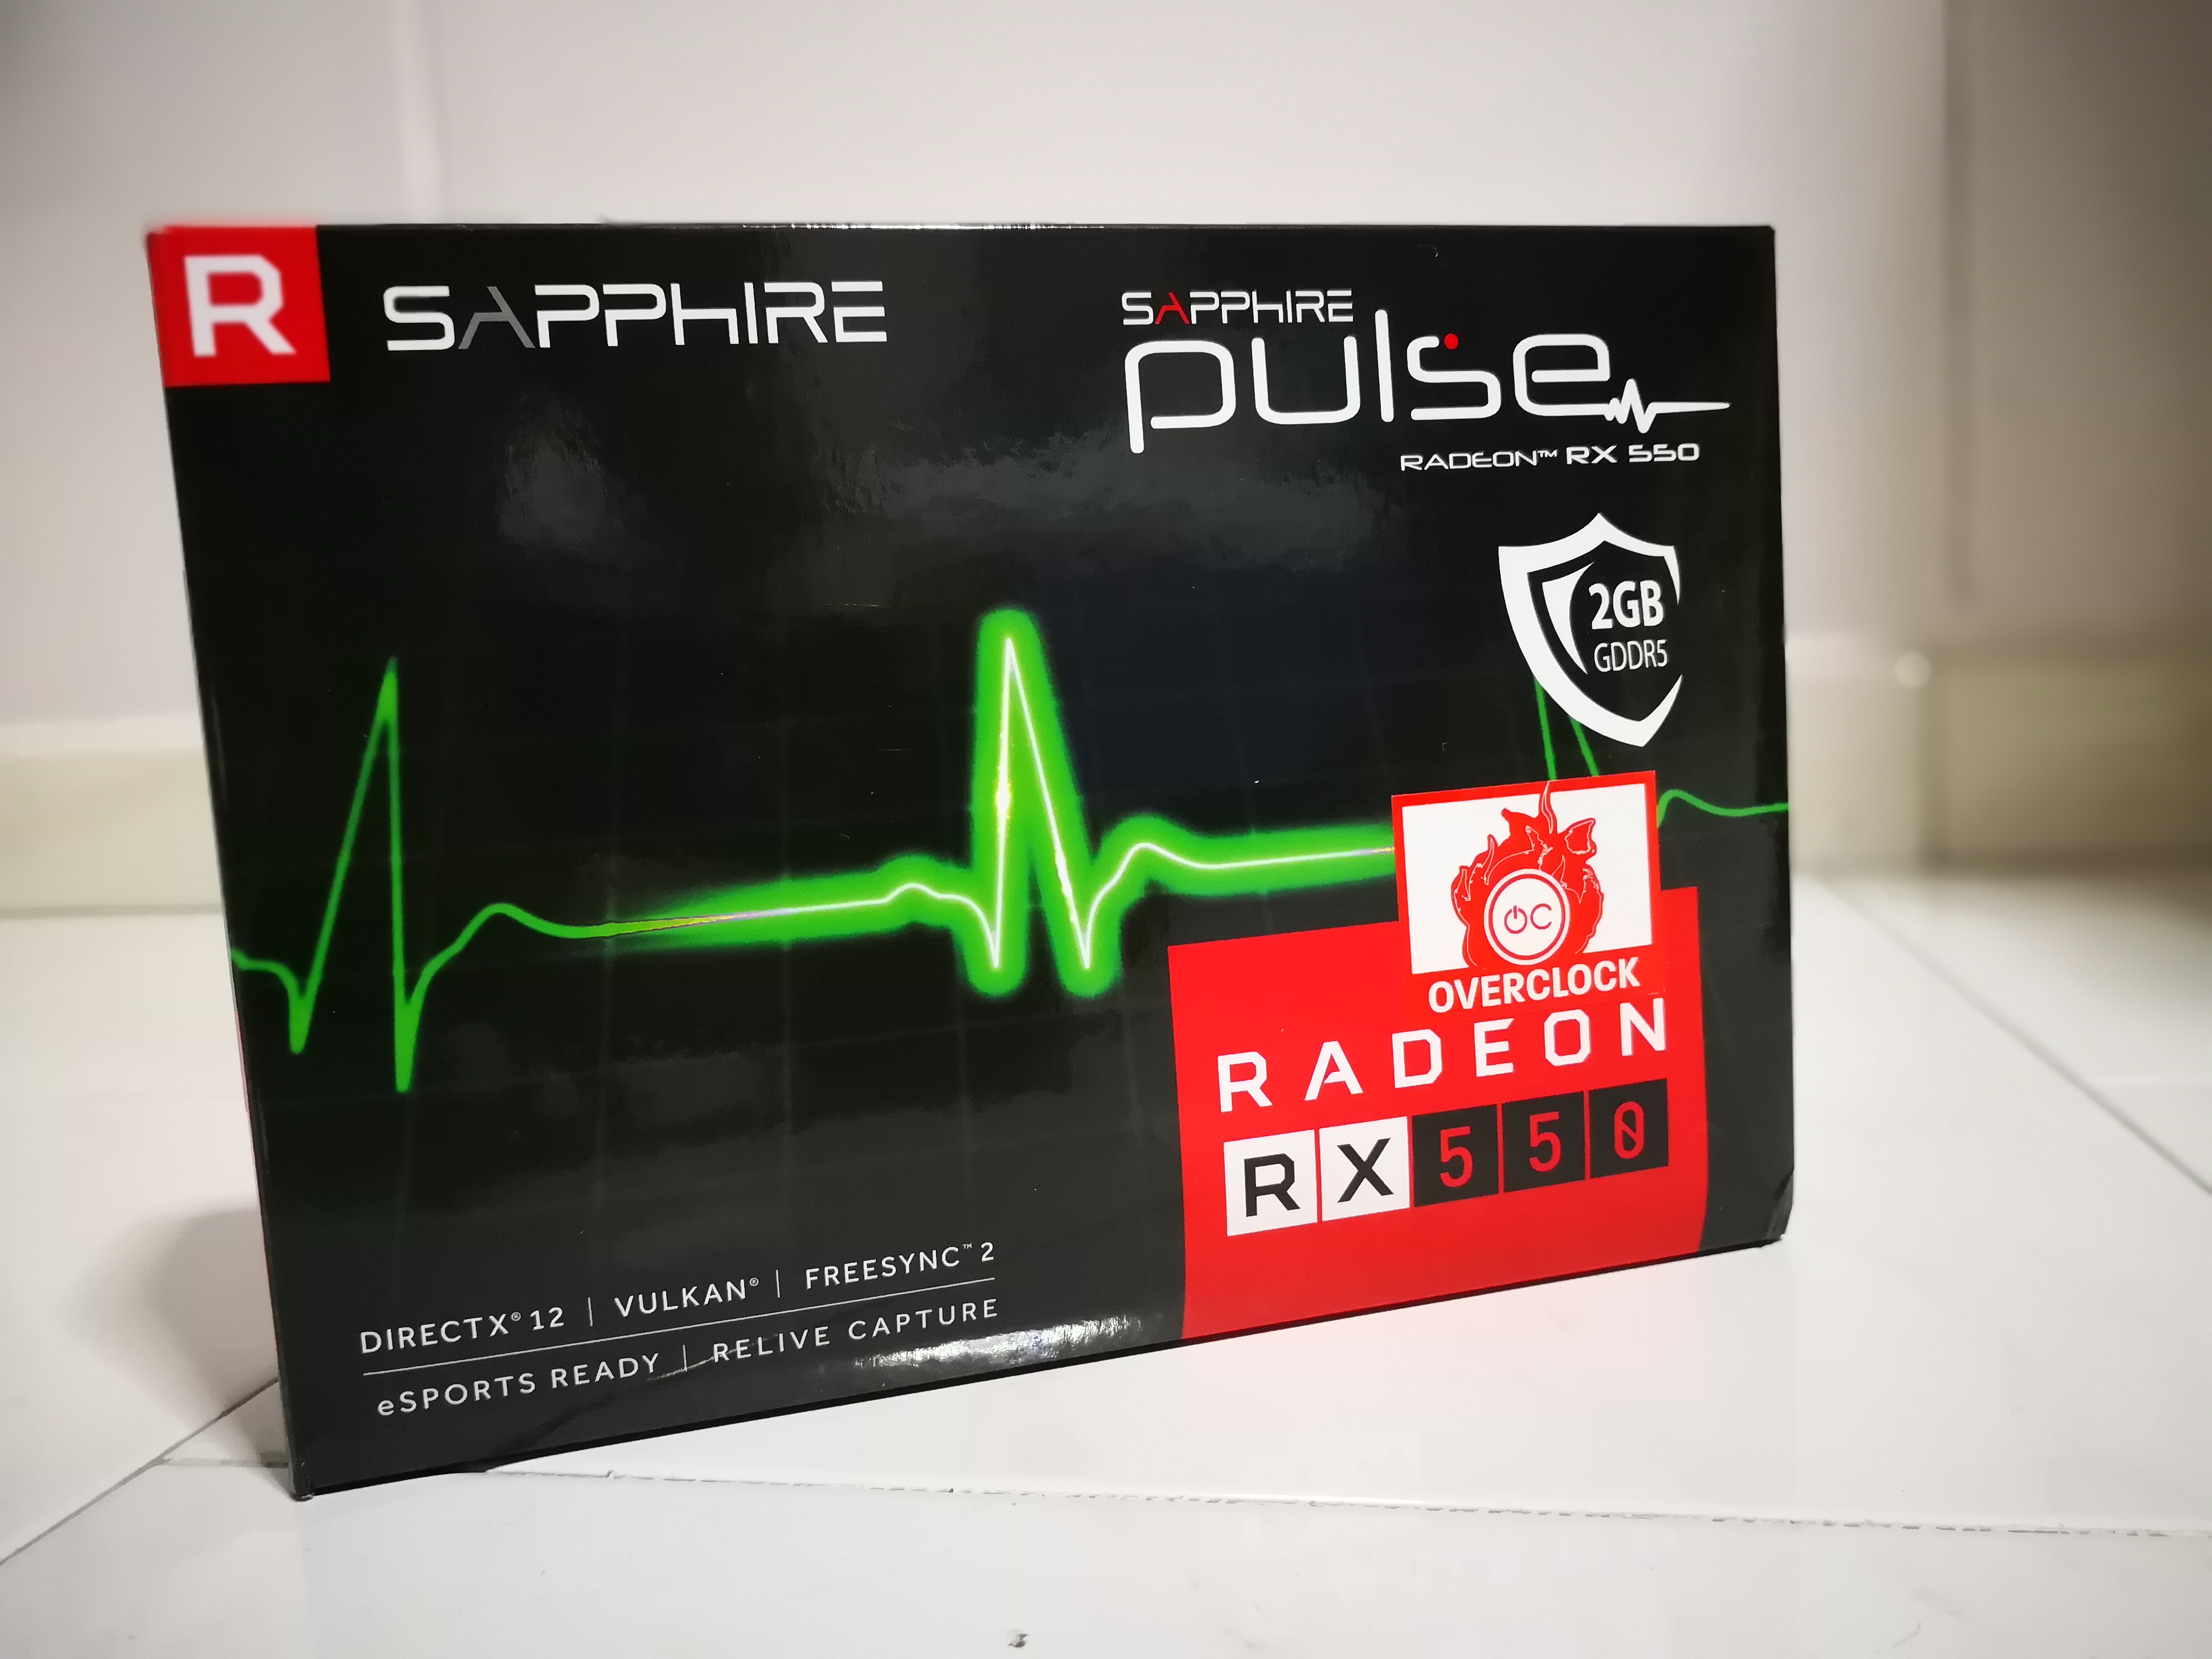 Location Interpreter Fatal Sapphire Radeon RX550 Pulse 2GB review - Is it still relevant today? - The  Tech Revolutionist